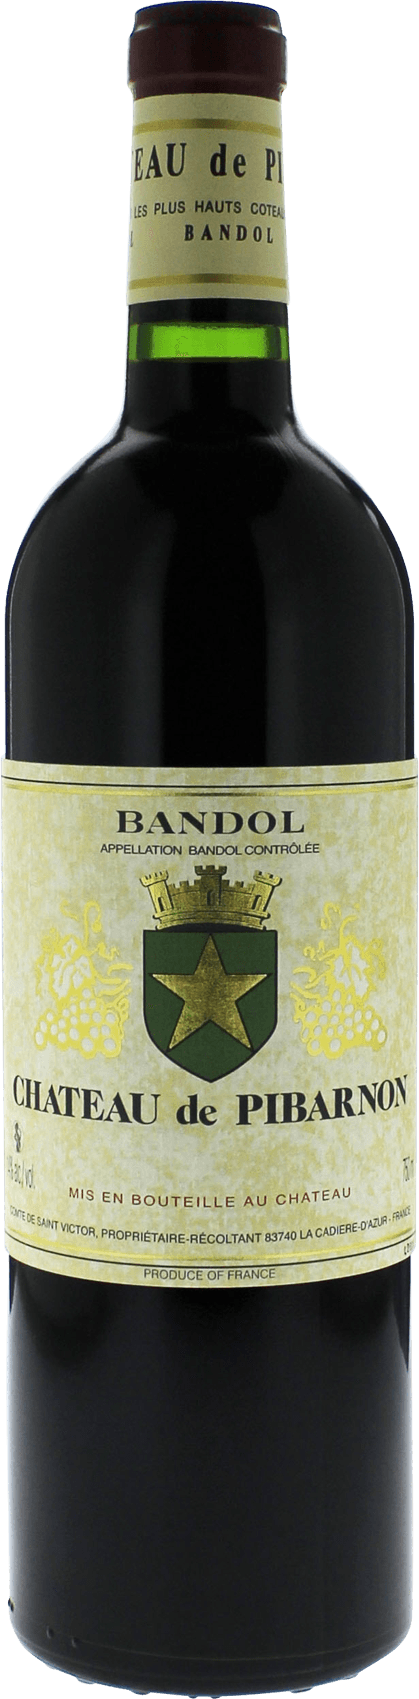 Bandol domaine de pibarnon rouge 1995  Bandol, Slection provence rouge